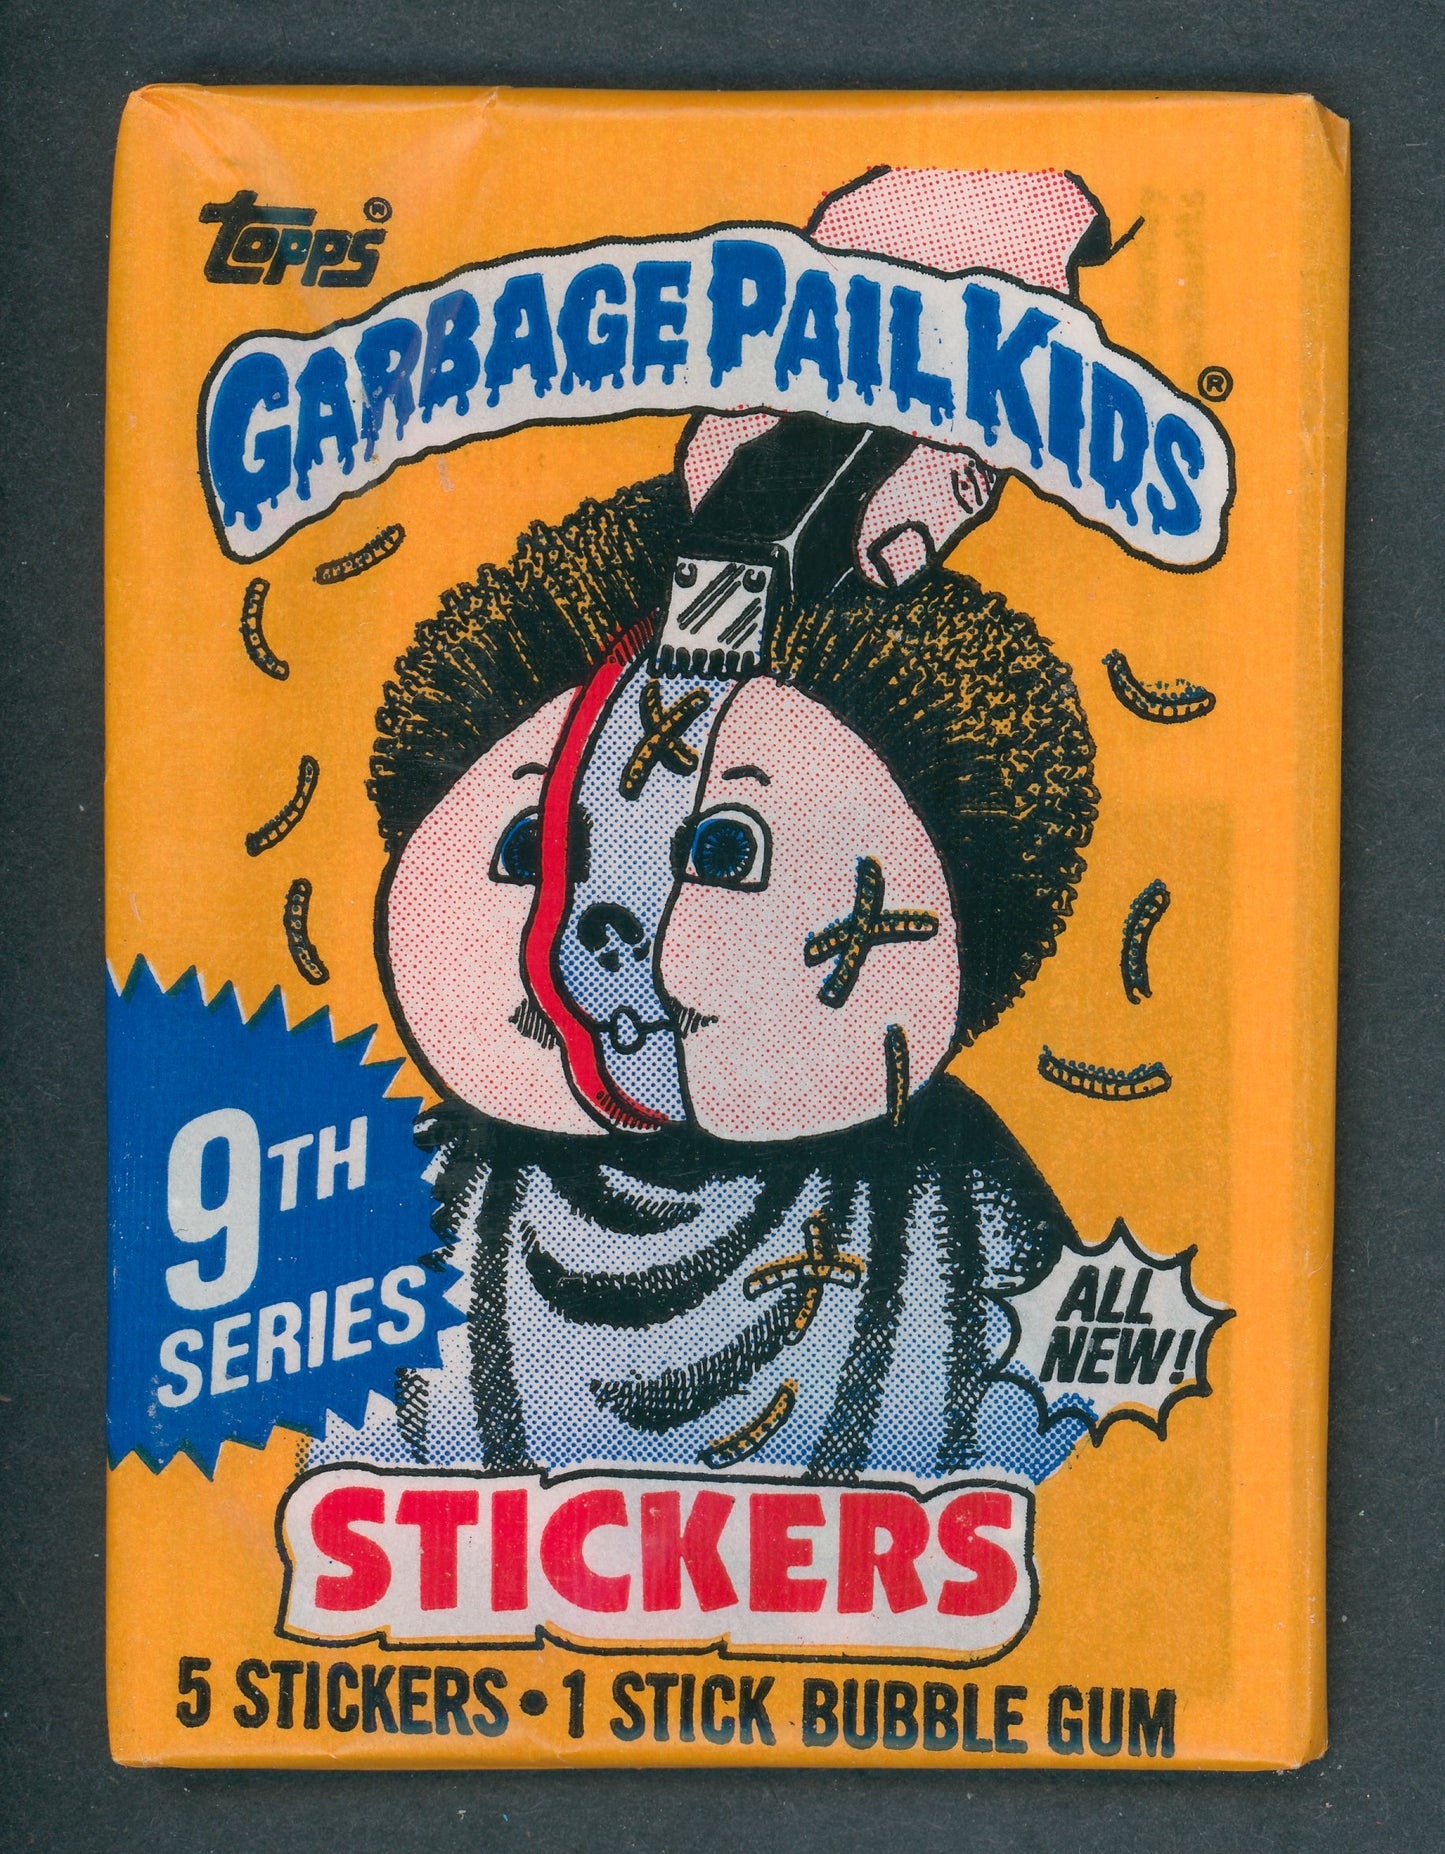 1987 Topps Garbage Pail Kids Series 9 Unopened Wax Pack (All New) (U.S.)